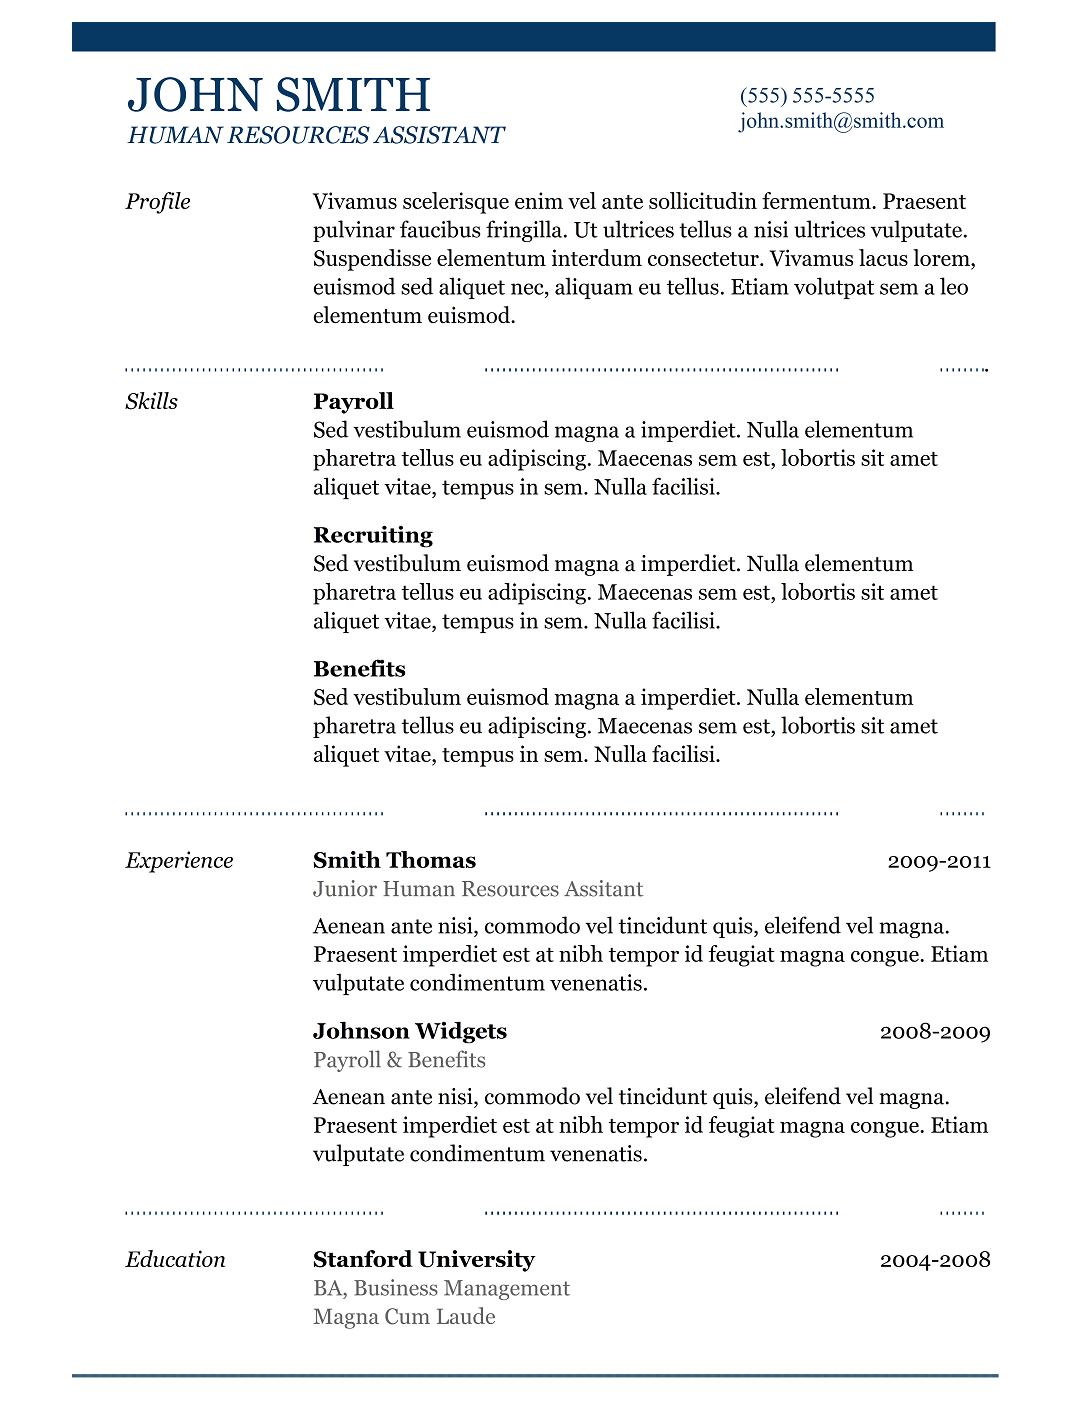 Sample resume for coles job